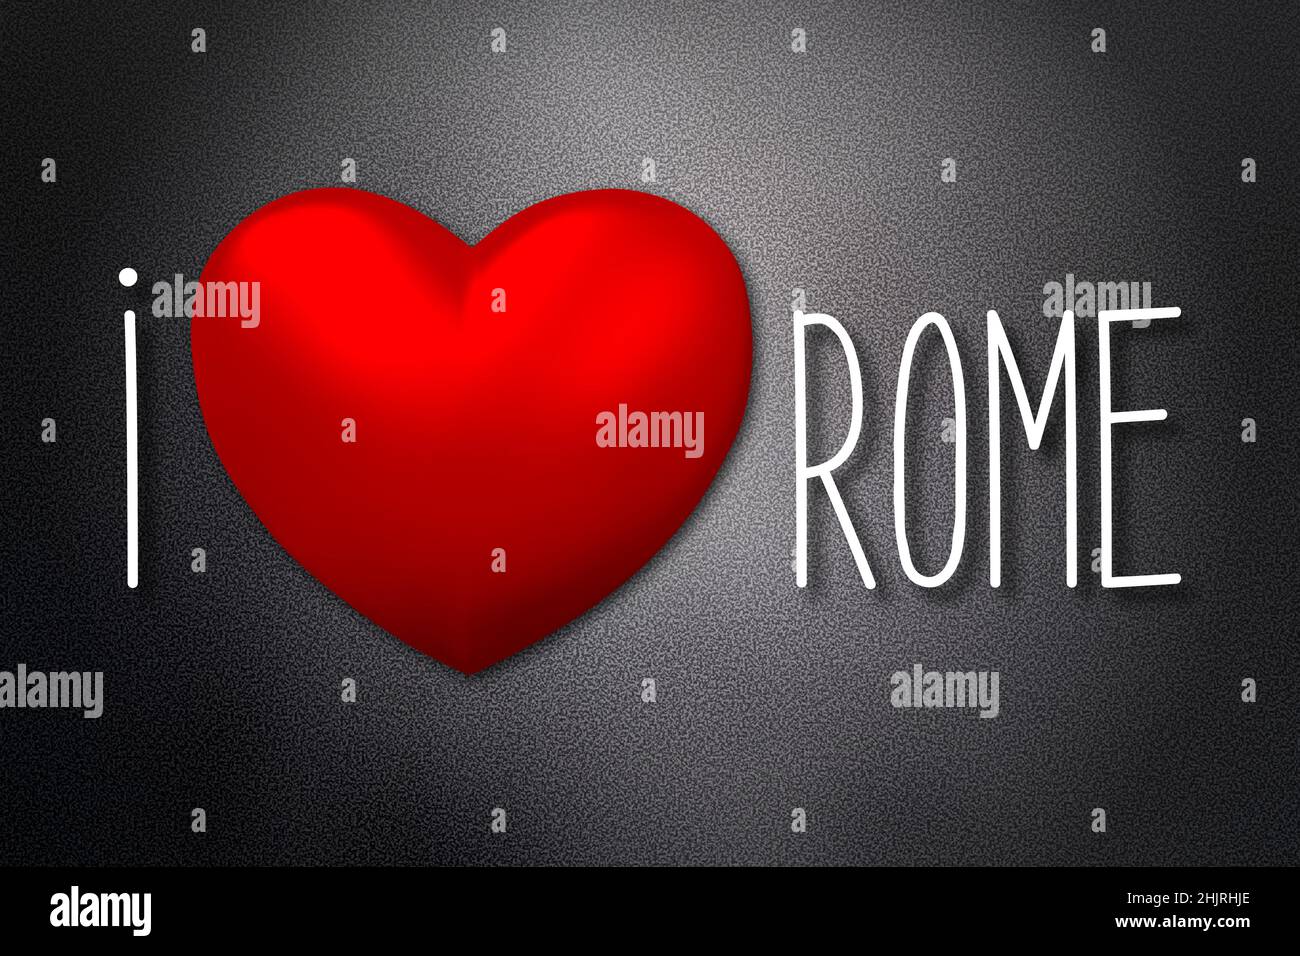 I love Rome - heart shape, black background - 3D illustration Stock Photo